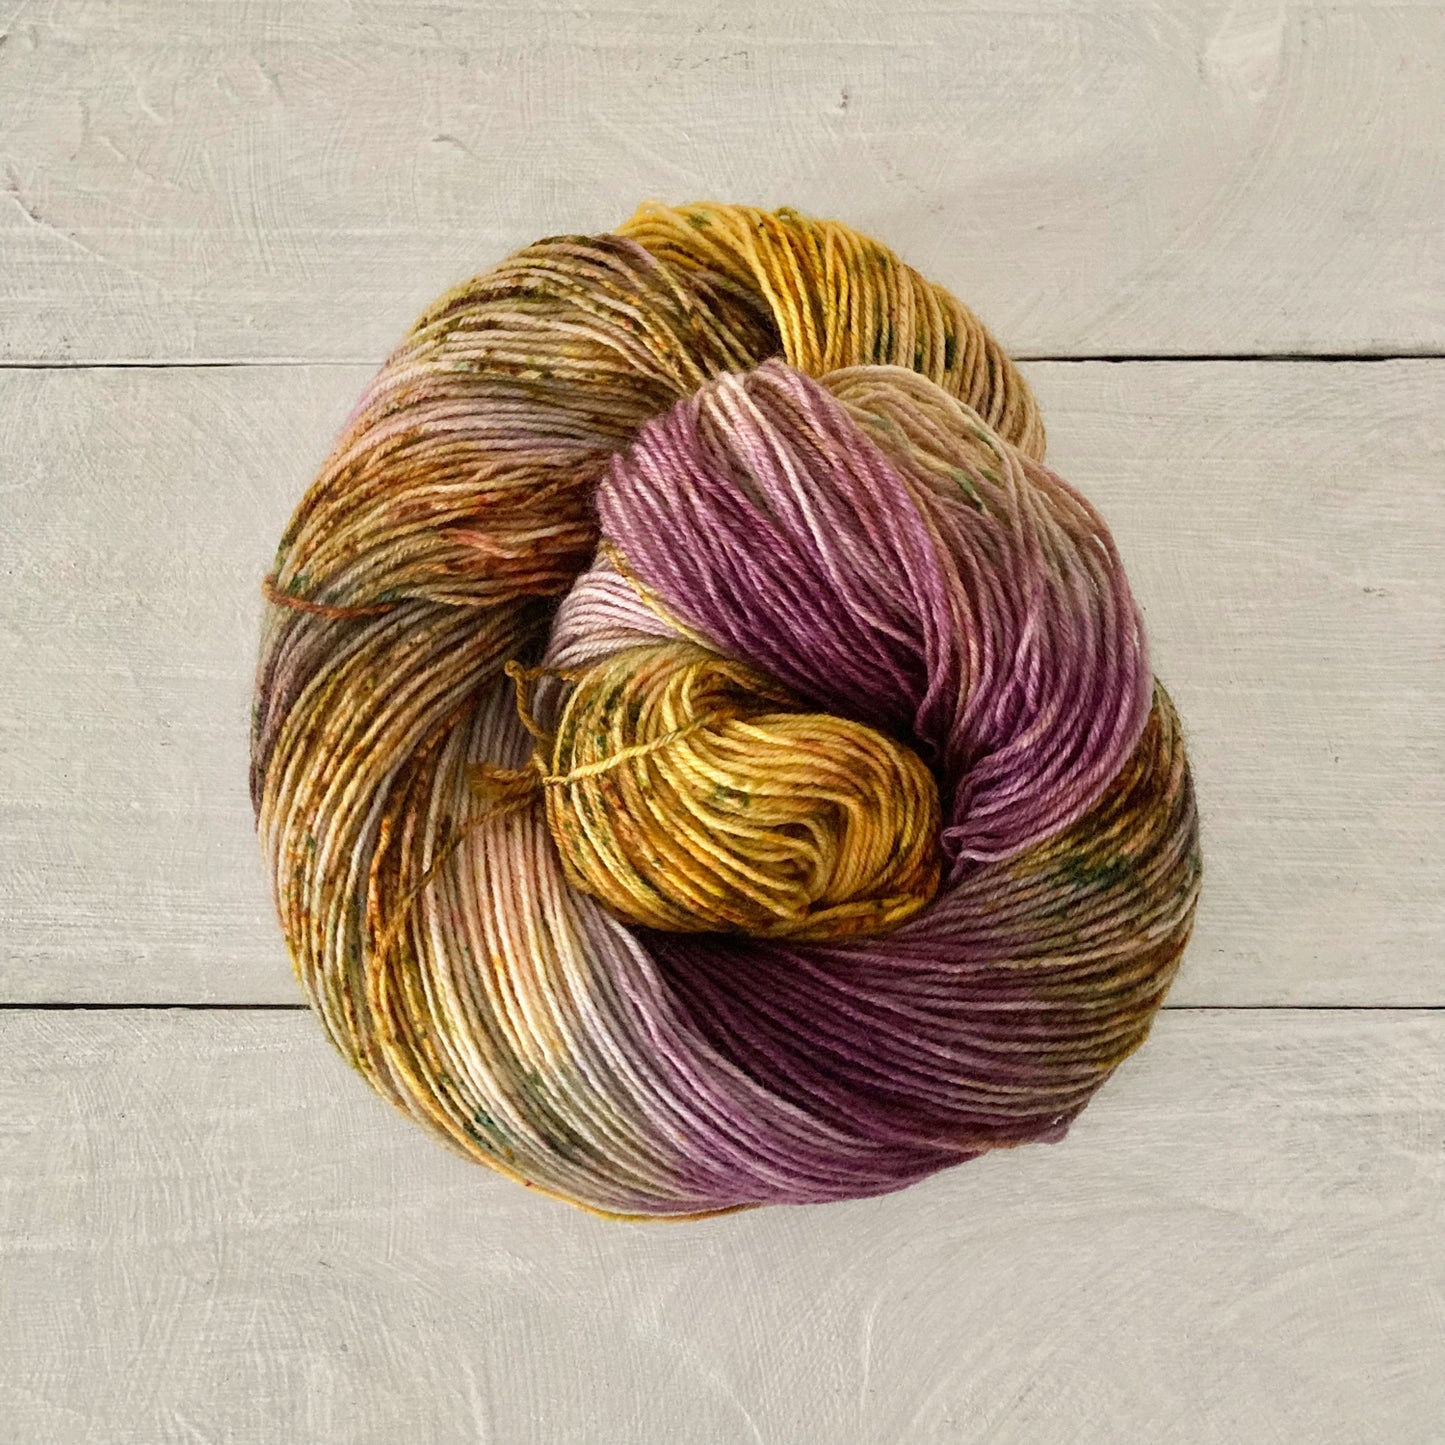 Hand-dyed yarn No.251 sock yarn "Der Wanderer"